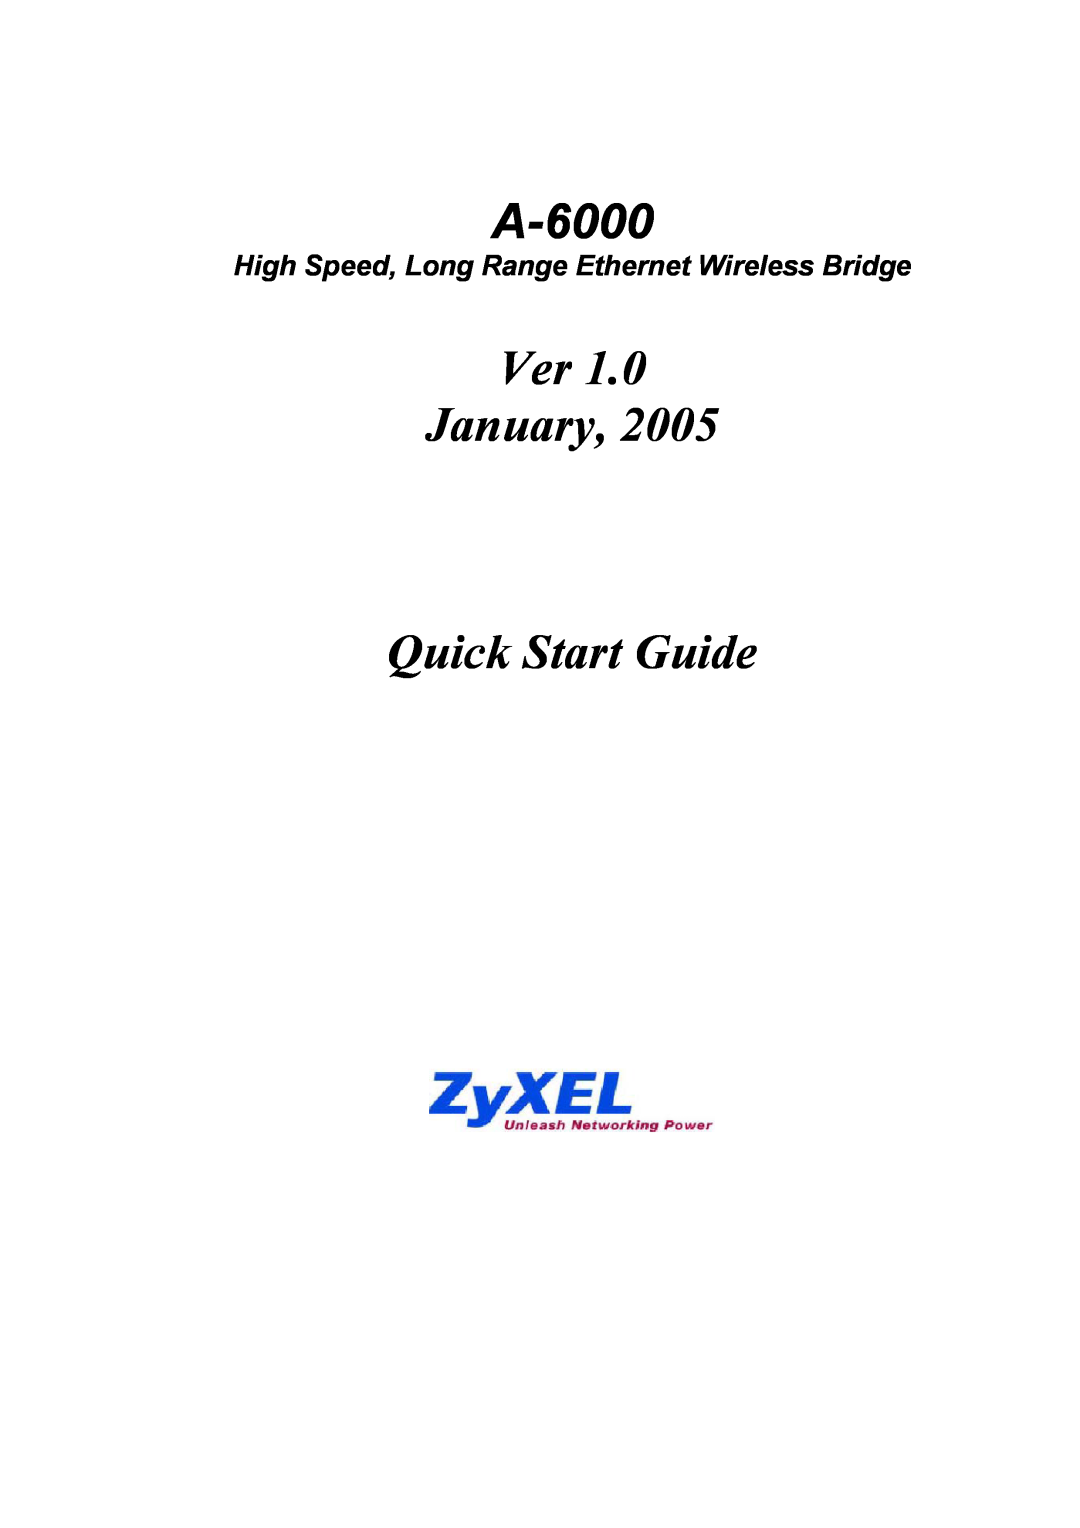 ZyXEL Communications A-6000 quick start Ver January Quick Start Guide, High Speed, Long Range Ethernet Wireless Bridge 